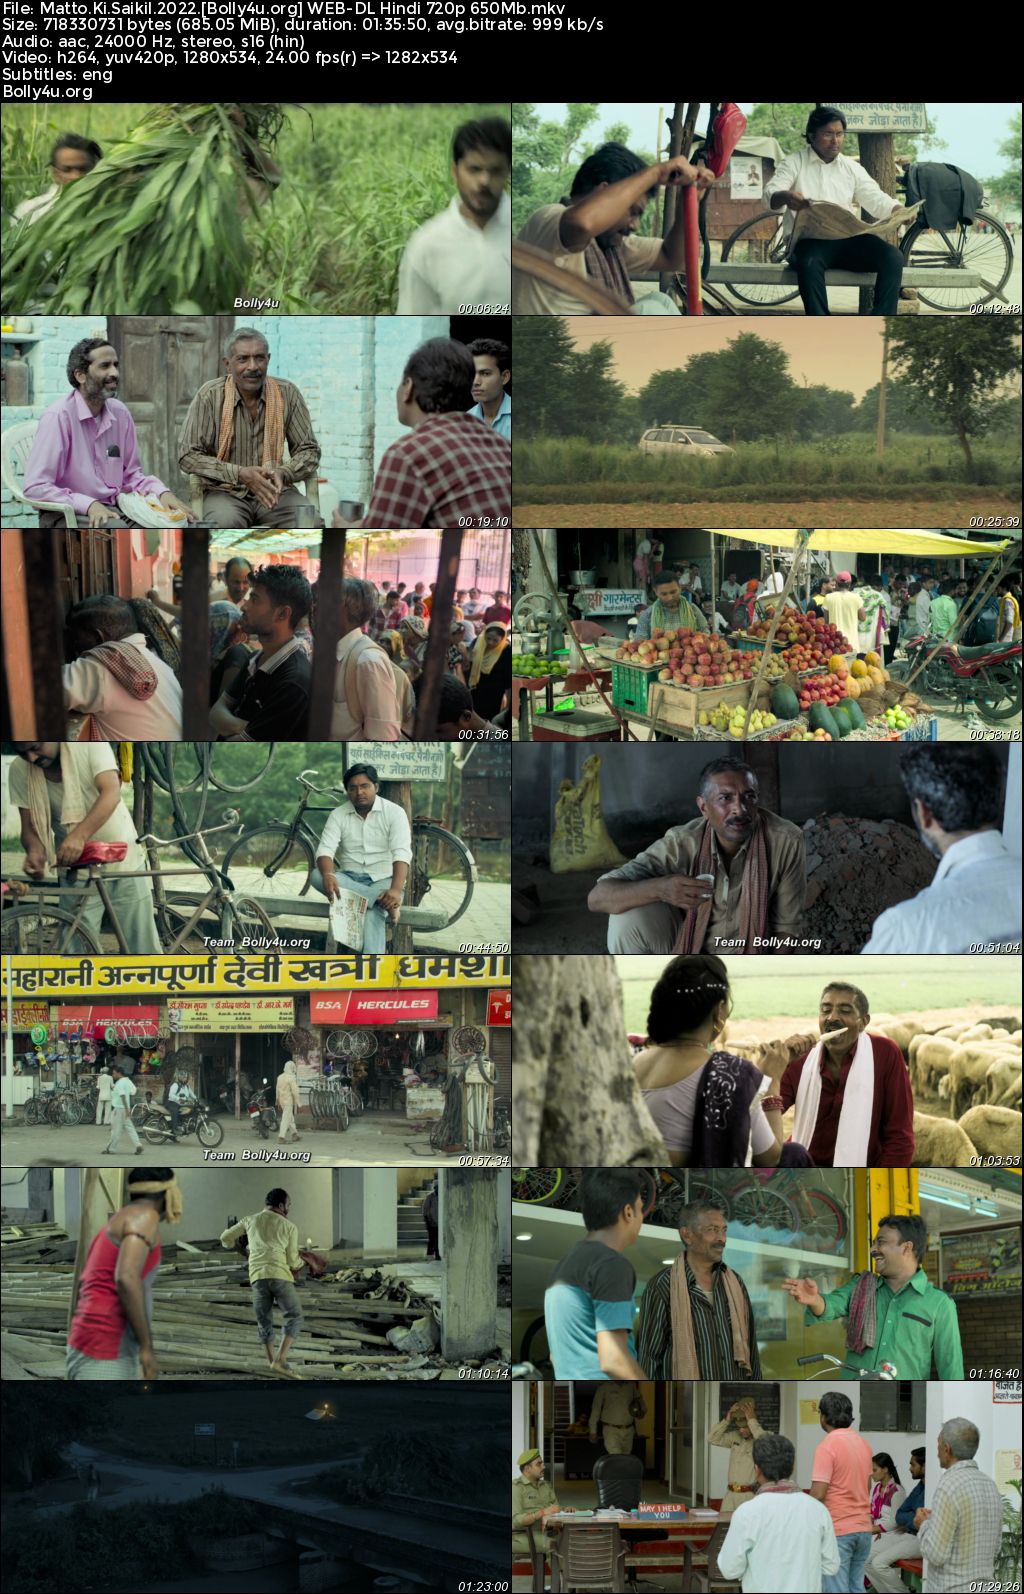 Matto Ki Saikil 2022 WEB-DL Hindi Full Movie Download 1080p 720p 480p